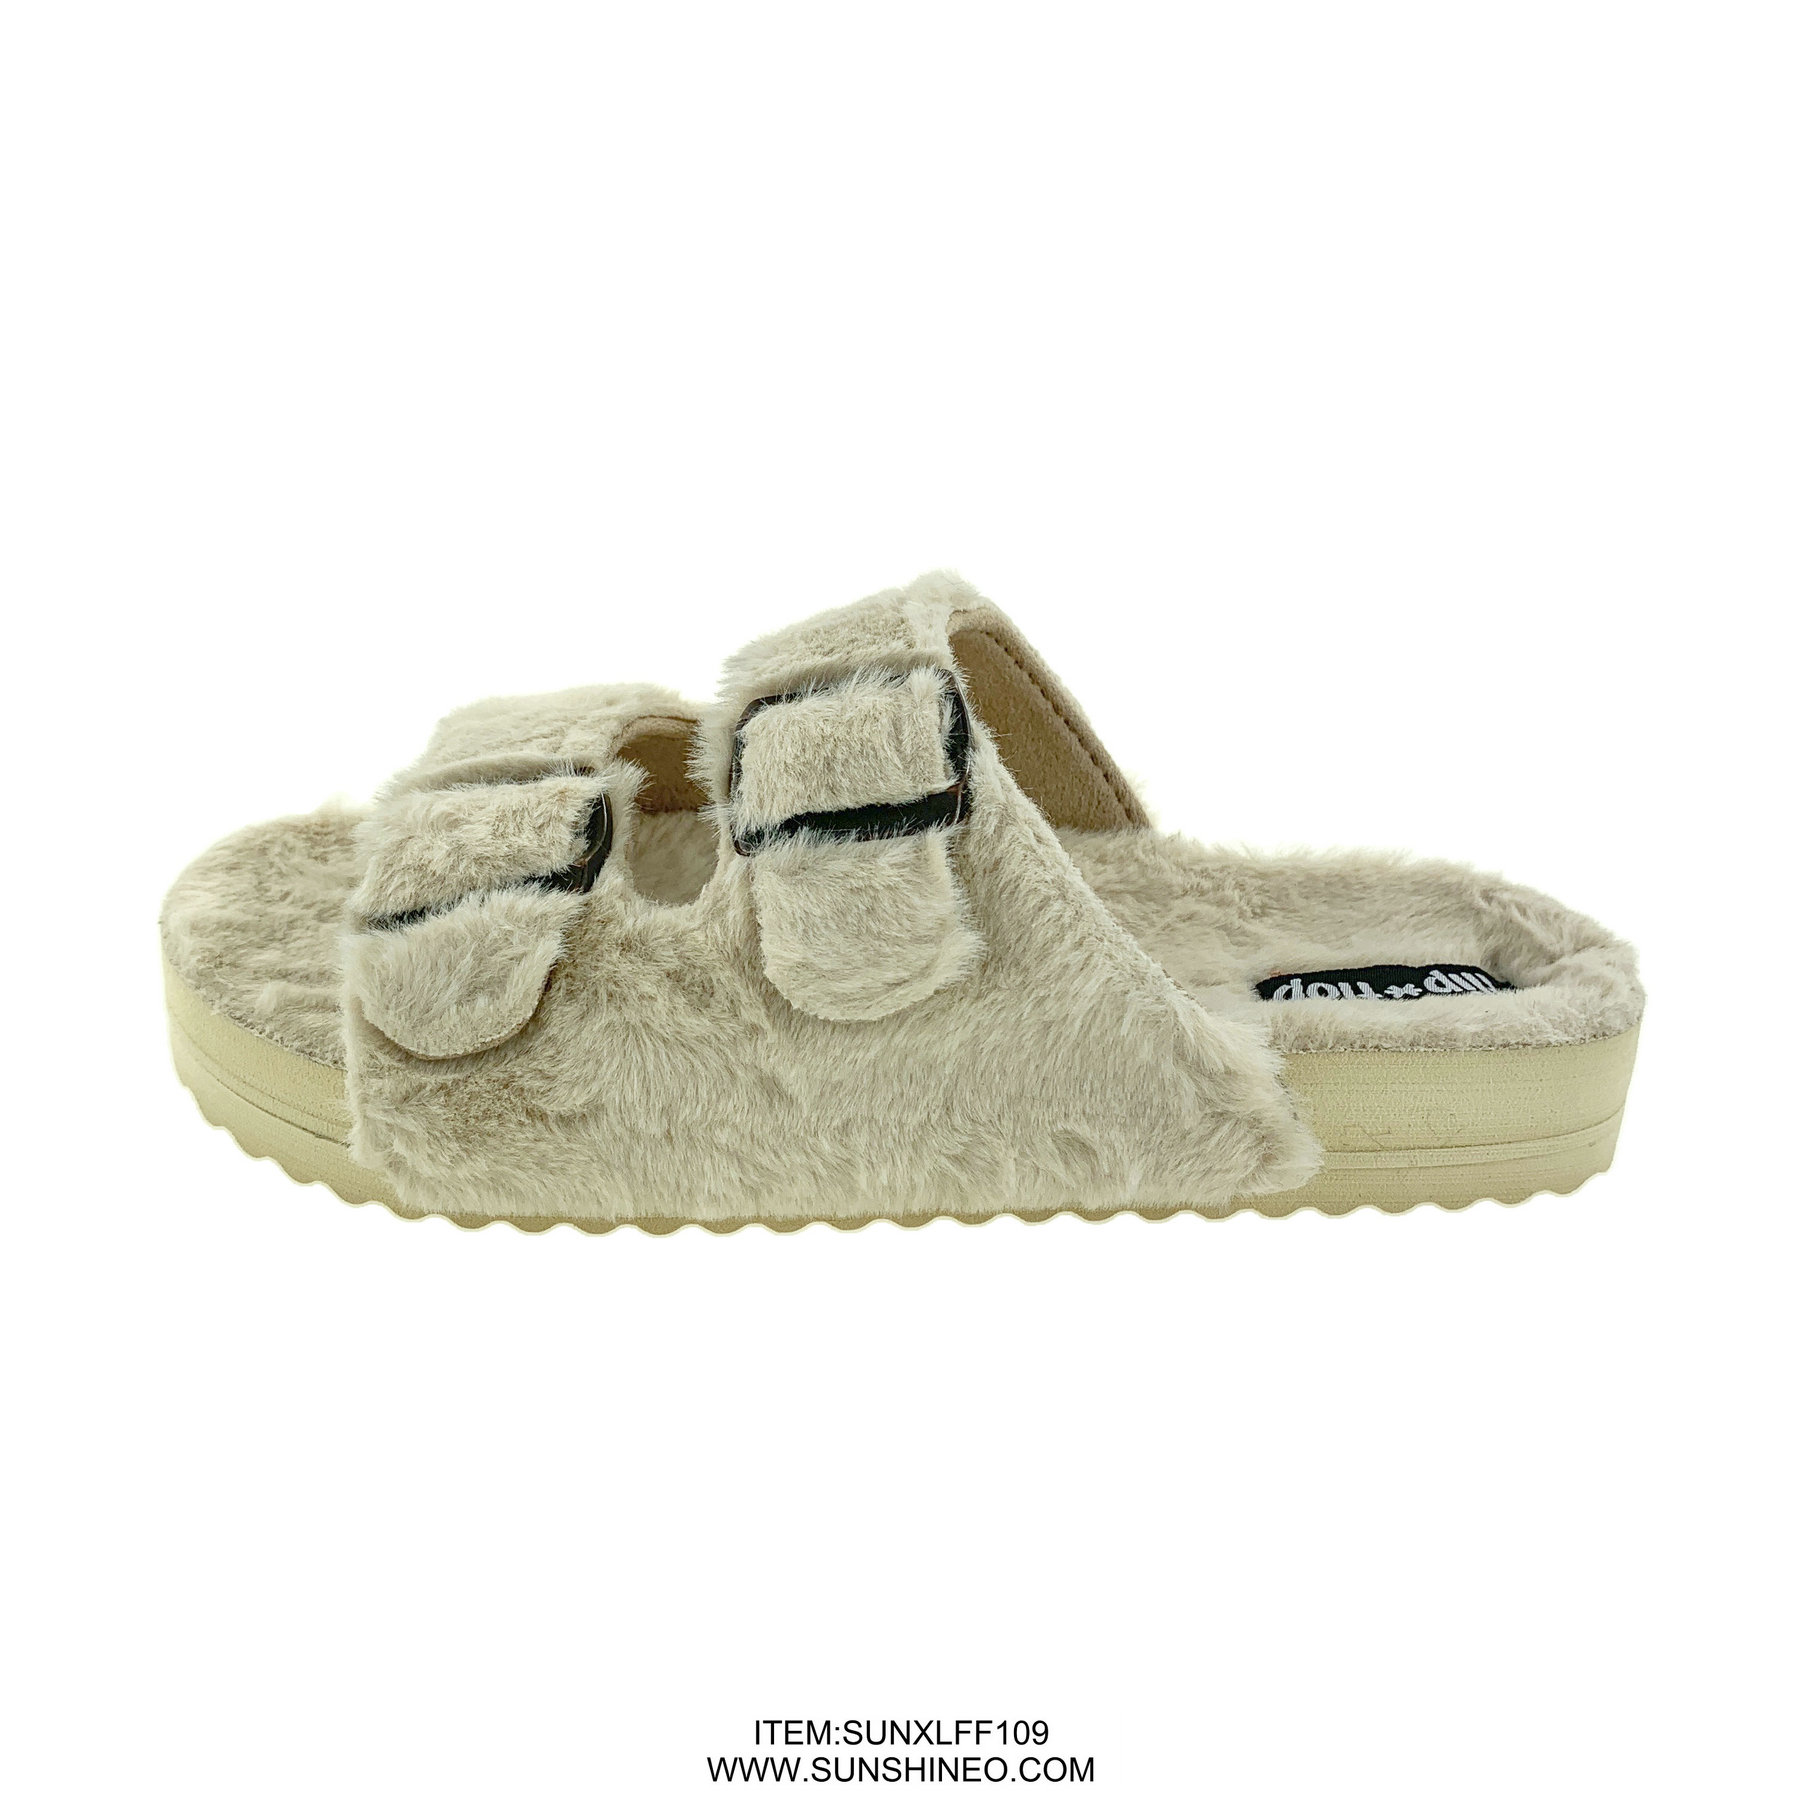 SUNXLFF109 fur flip flop sandals winter slippers